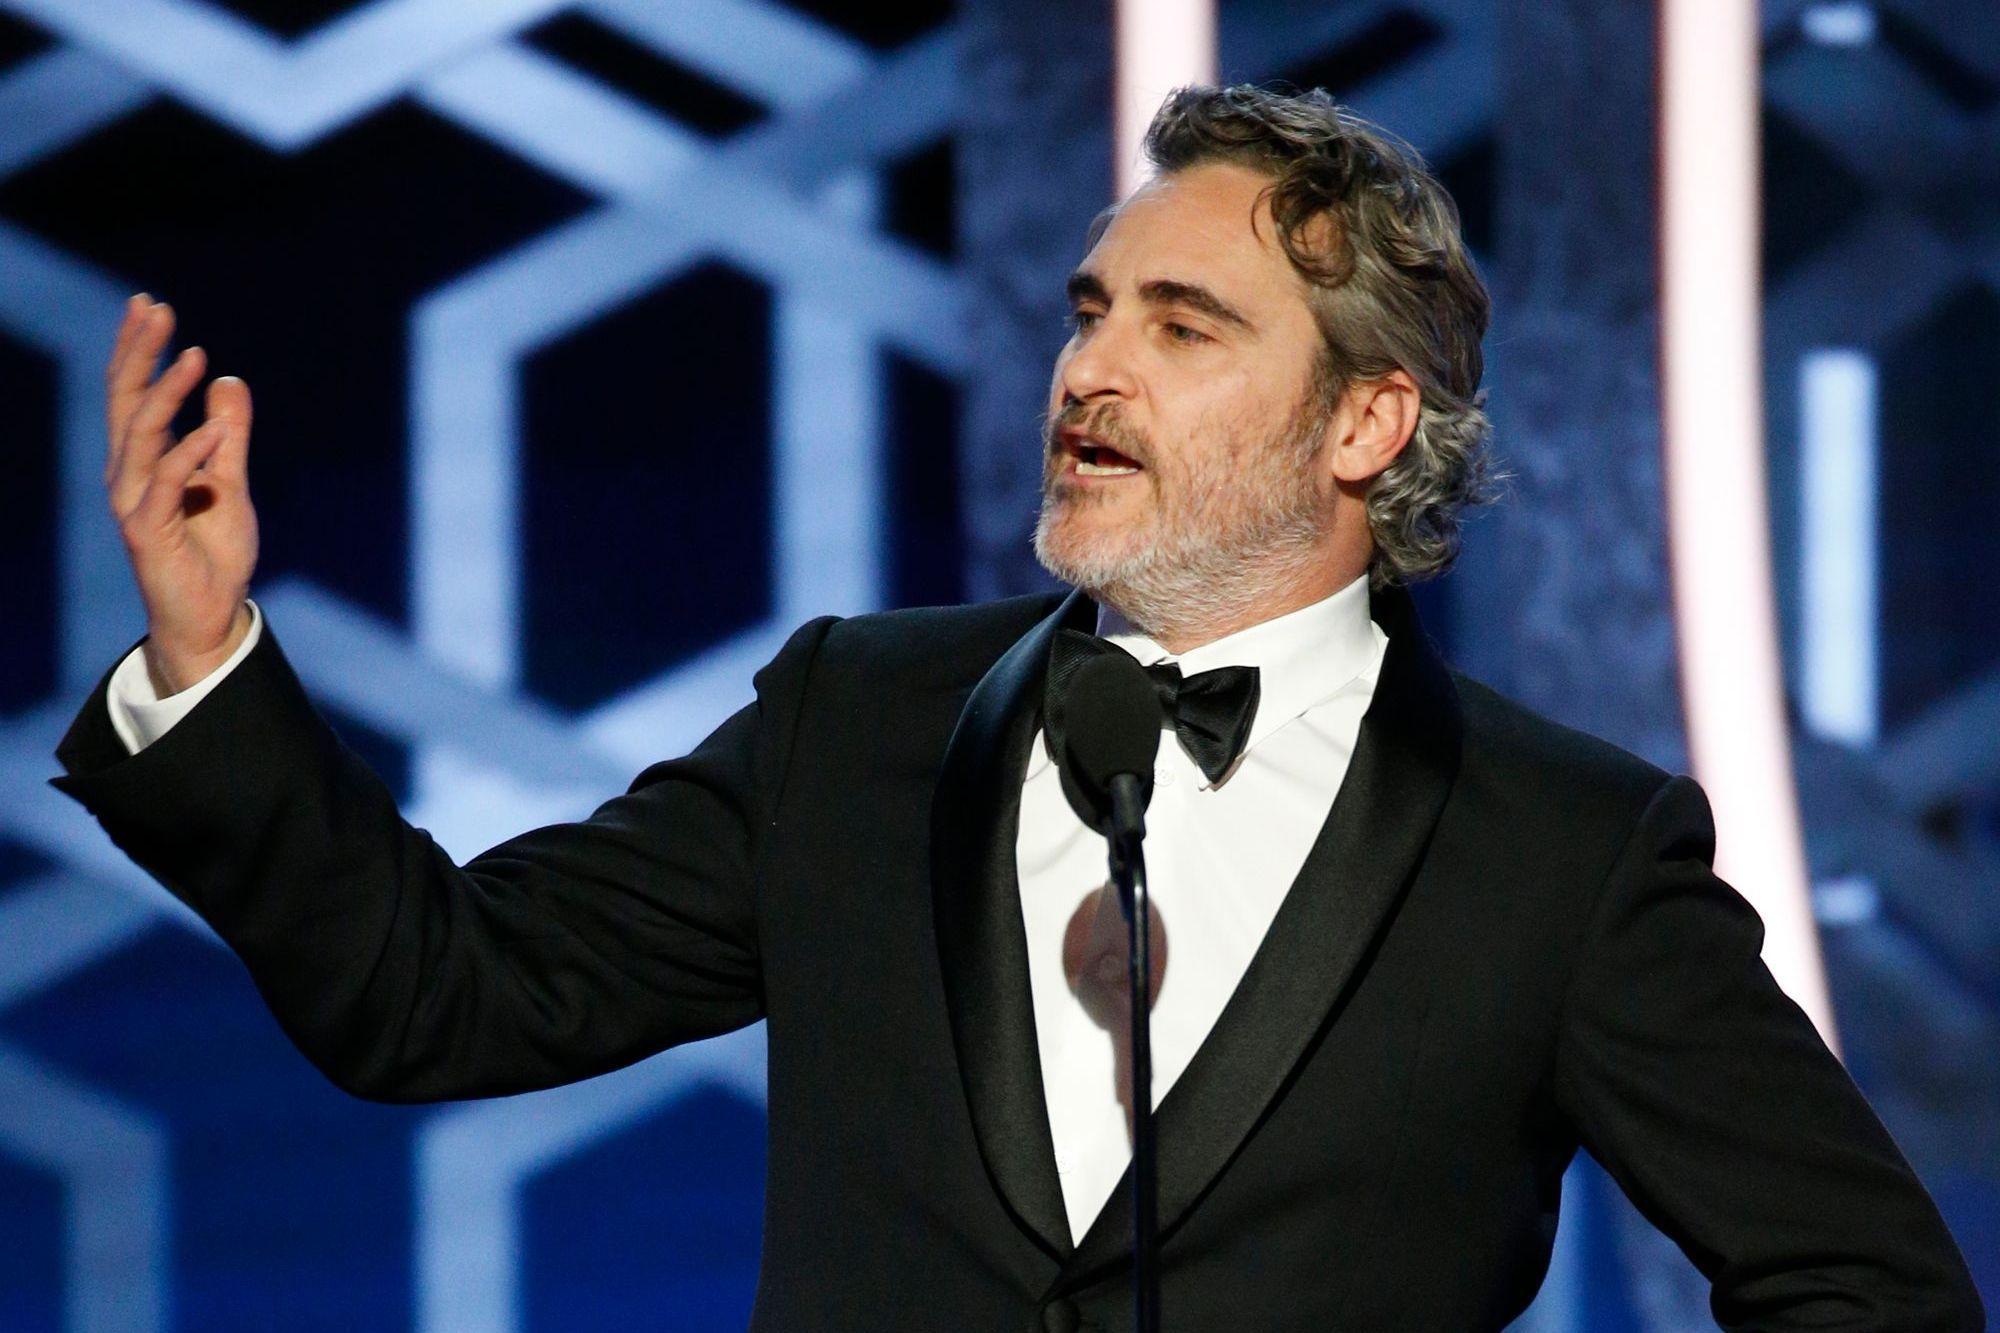 Oscars 2020 Winners List: The Academy Award Goes To